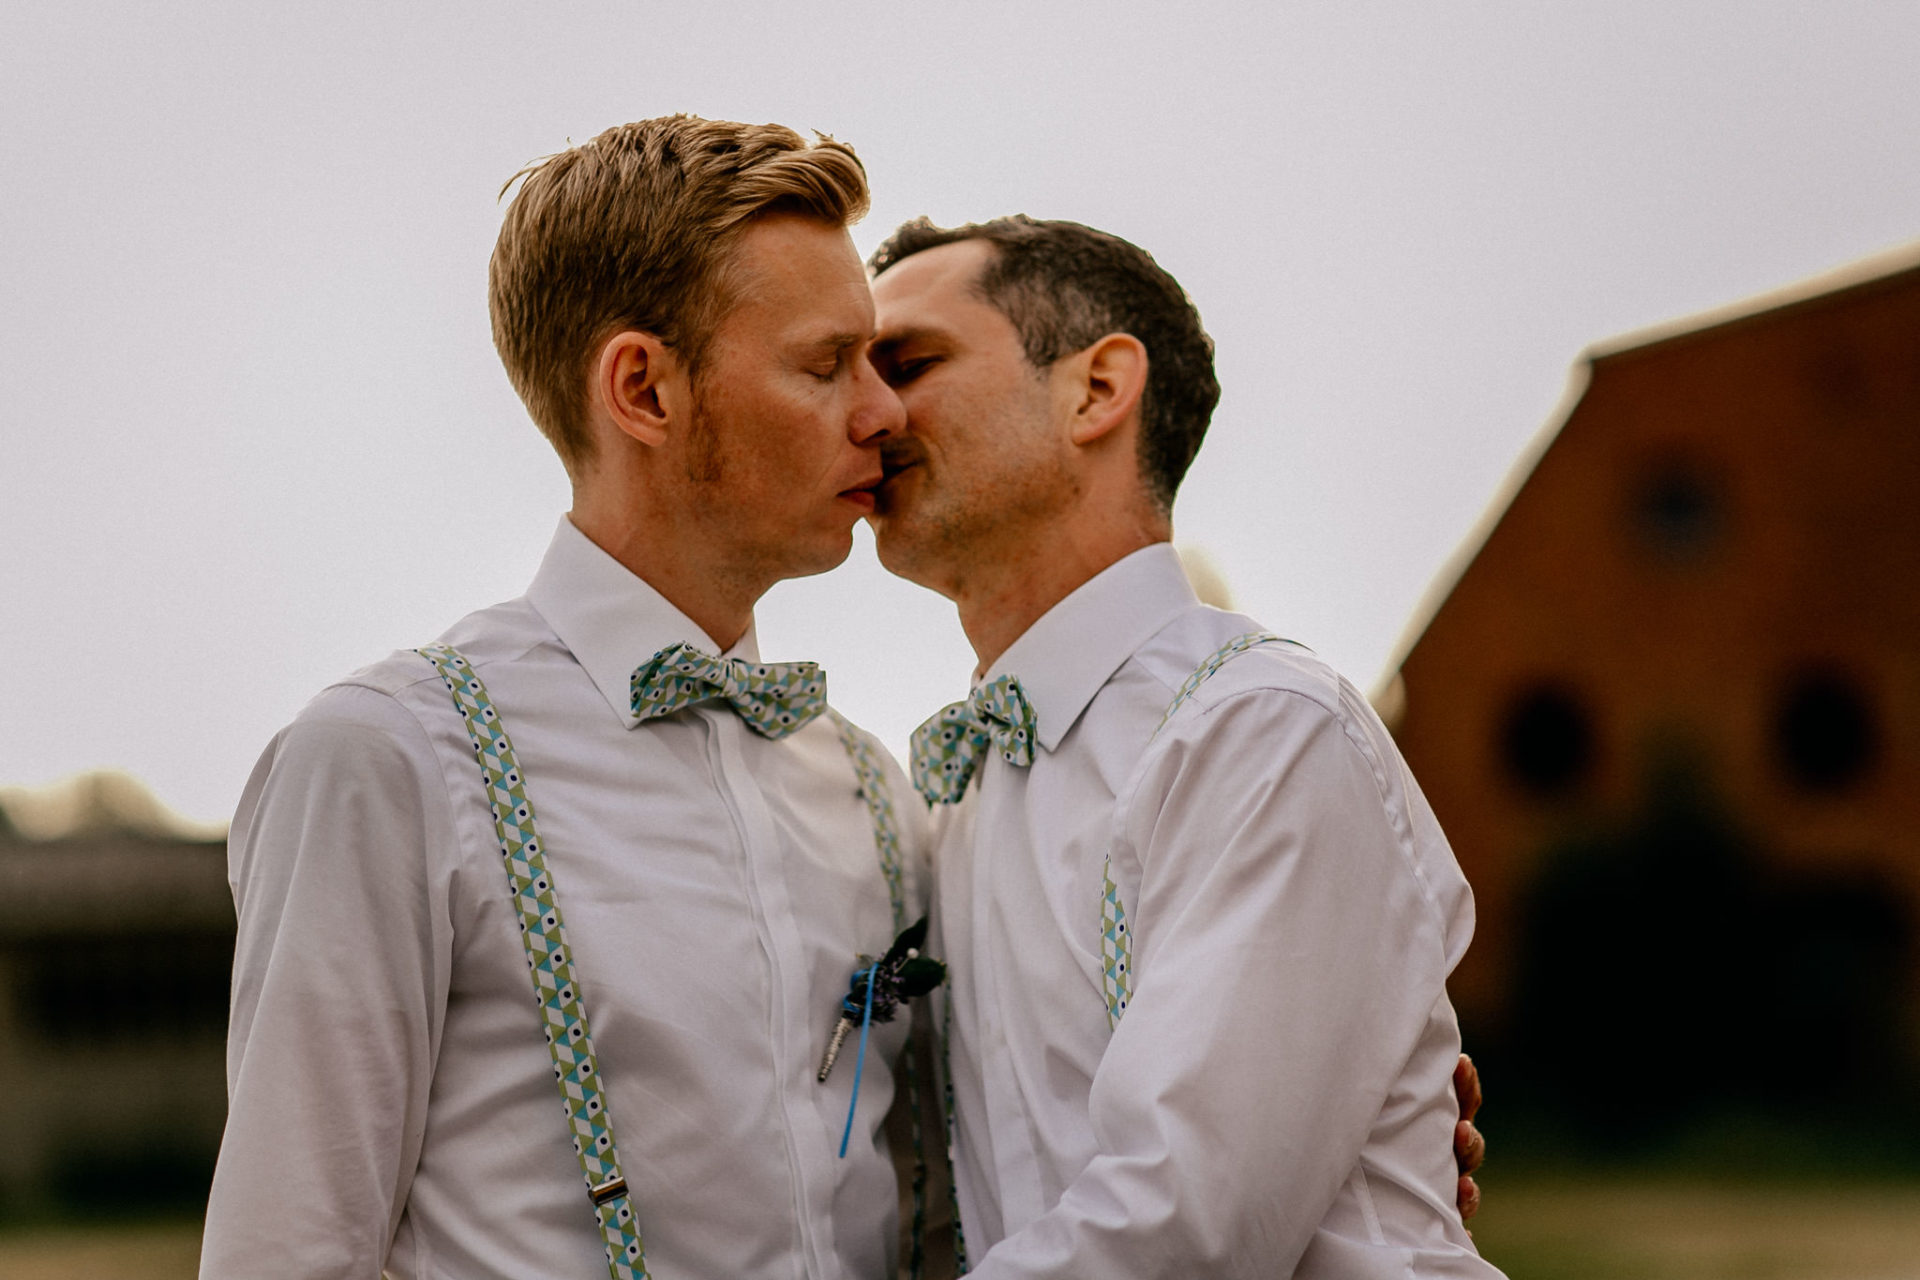 gay wedding germany-same sex couple portrait-wedding photographer germany lgbt wedding